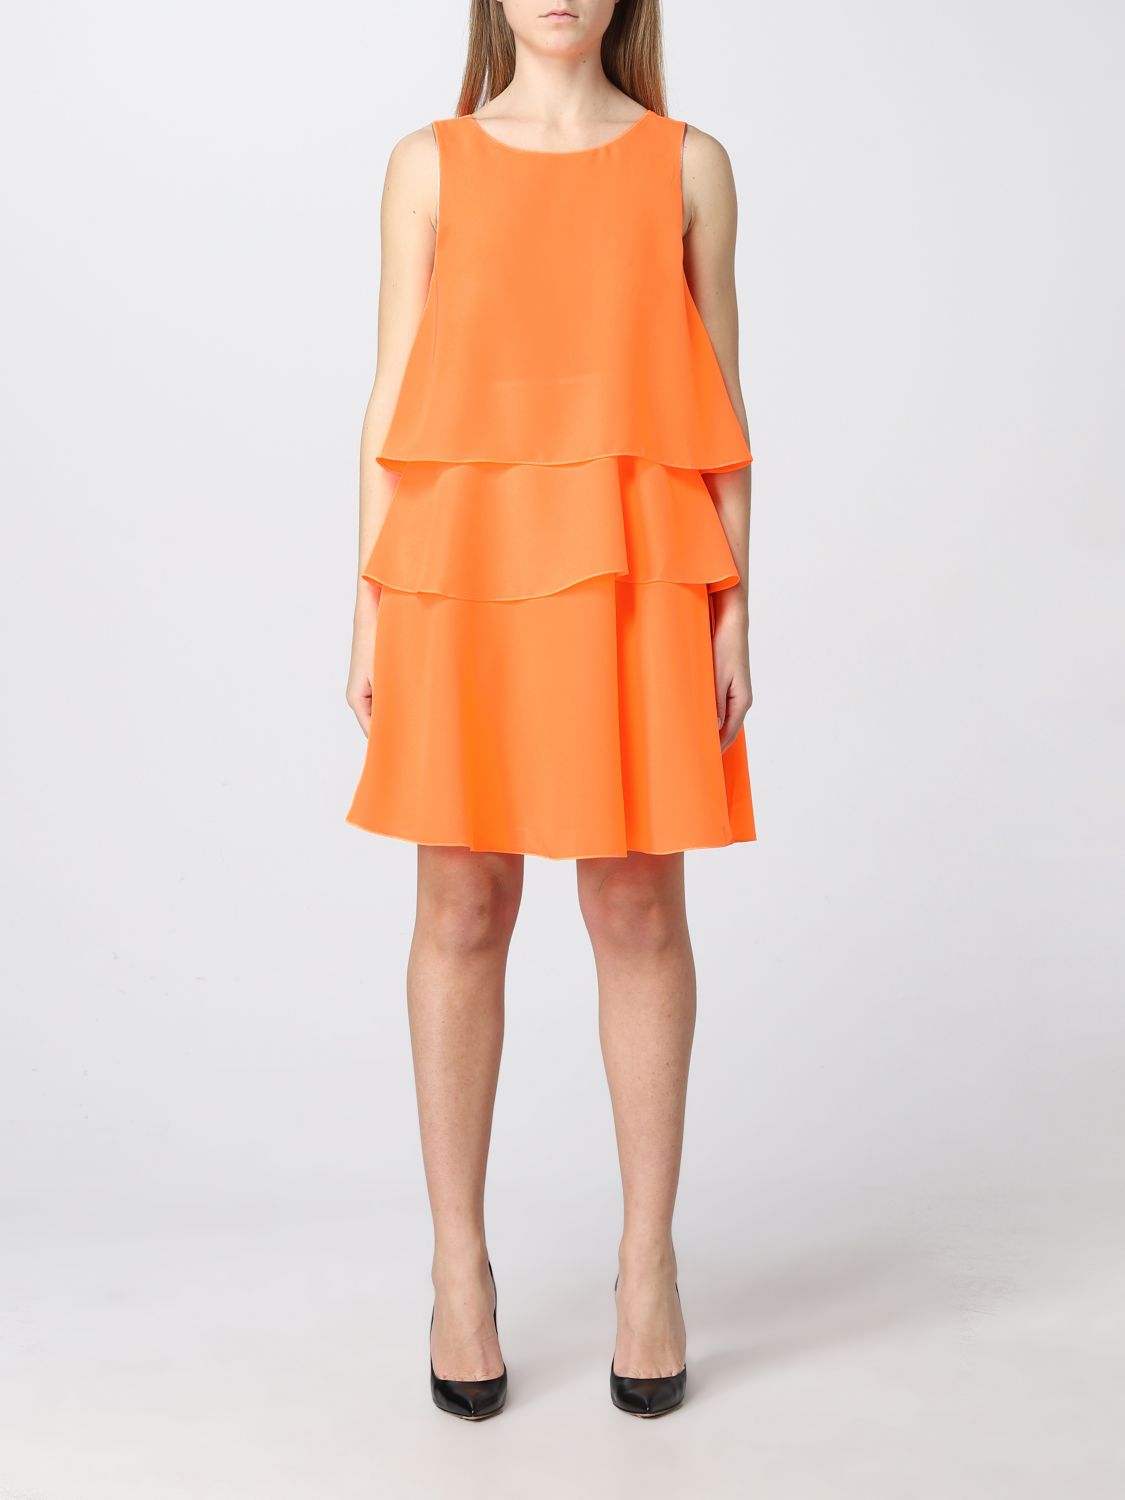 Introducir 47+ imagen armani exchange orange dress